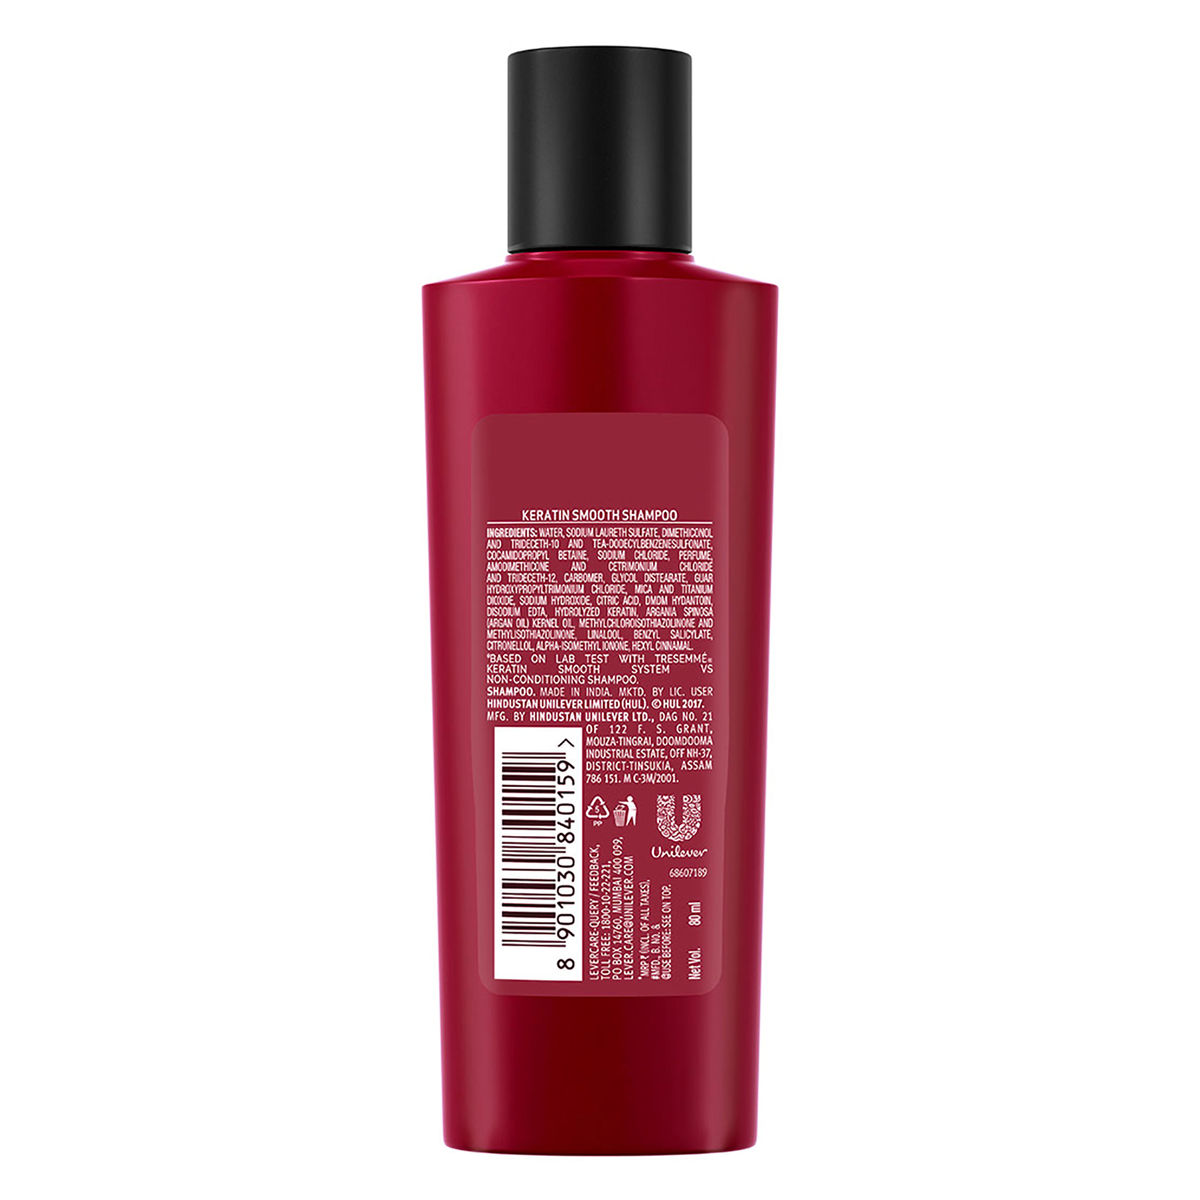 Tresemme Silky and Smooth Frizz Control with Argan Oil shampoo 28 fl oz